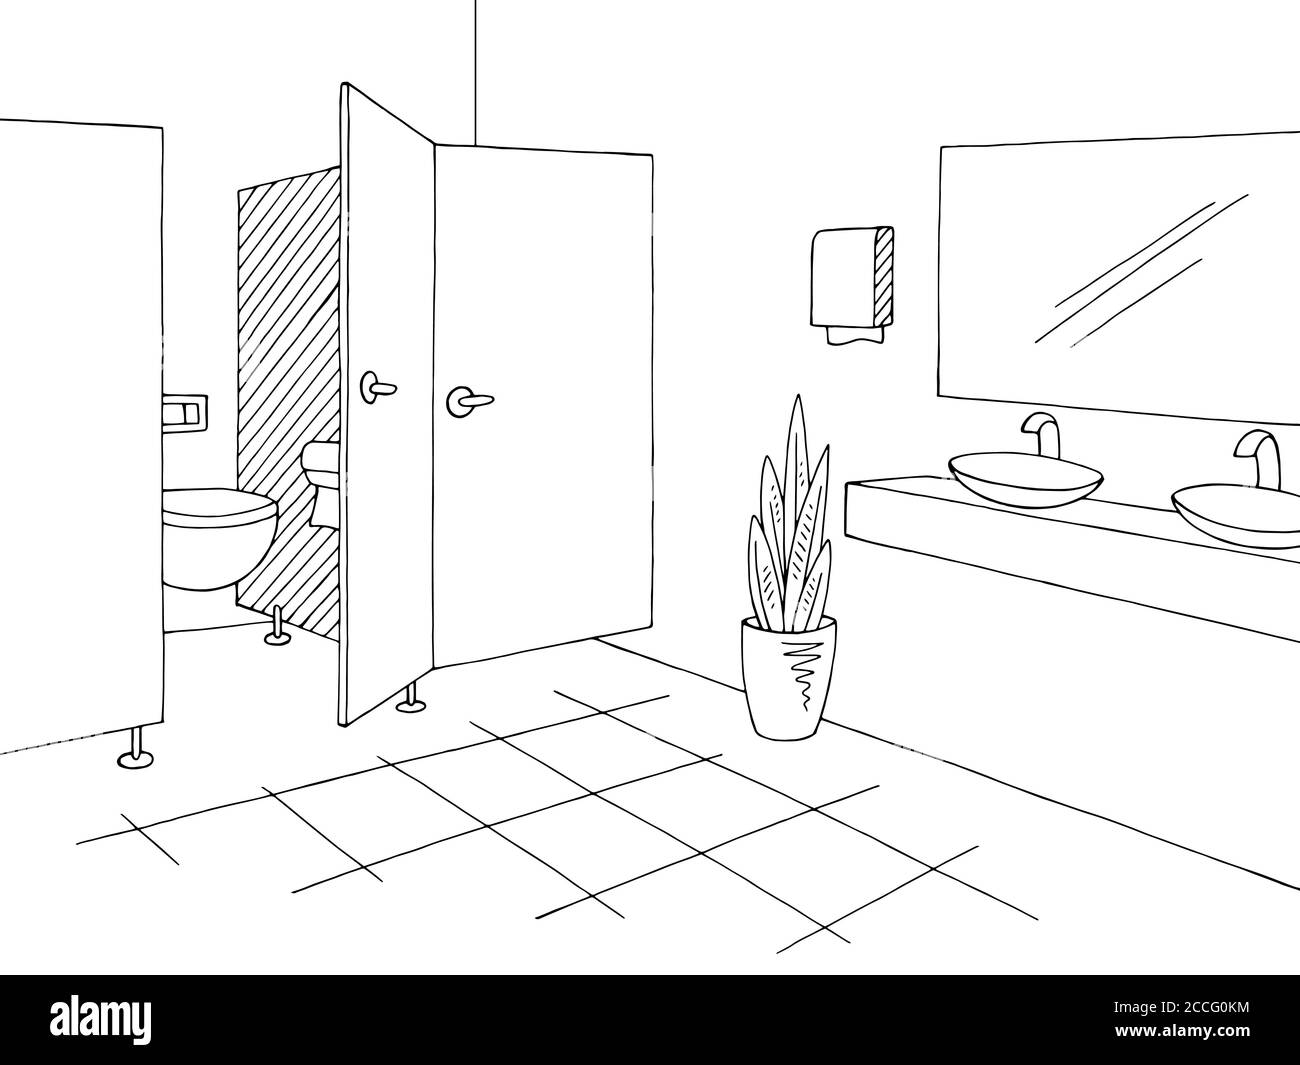 Public toilet graphic interior black white sketch illustration vector Stock Vector